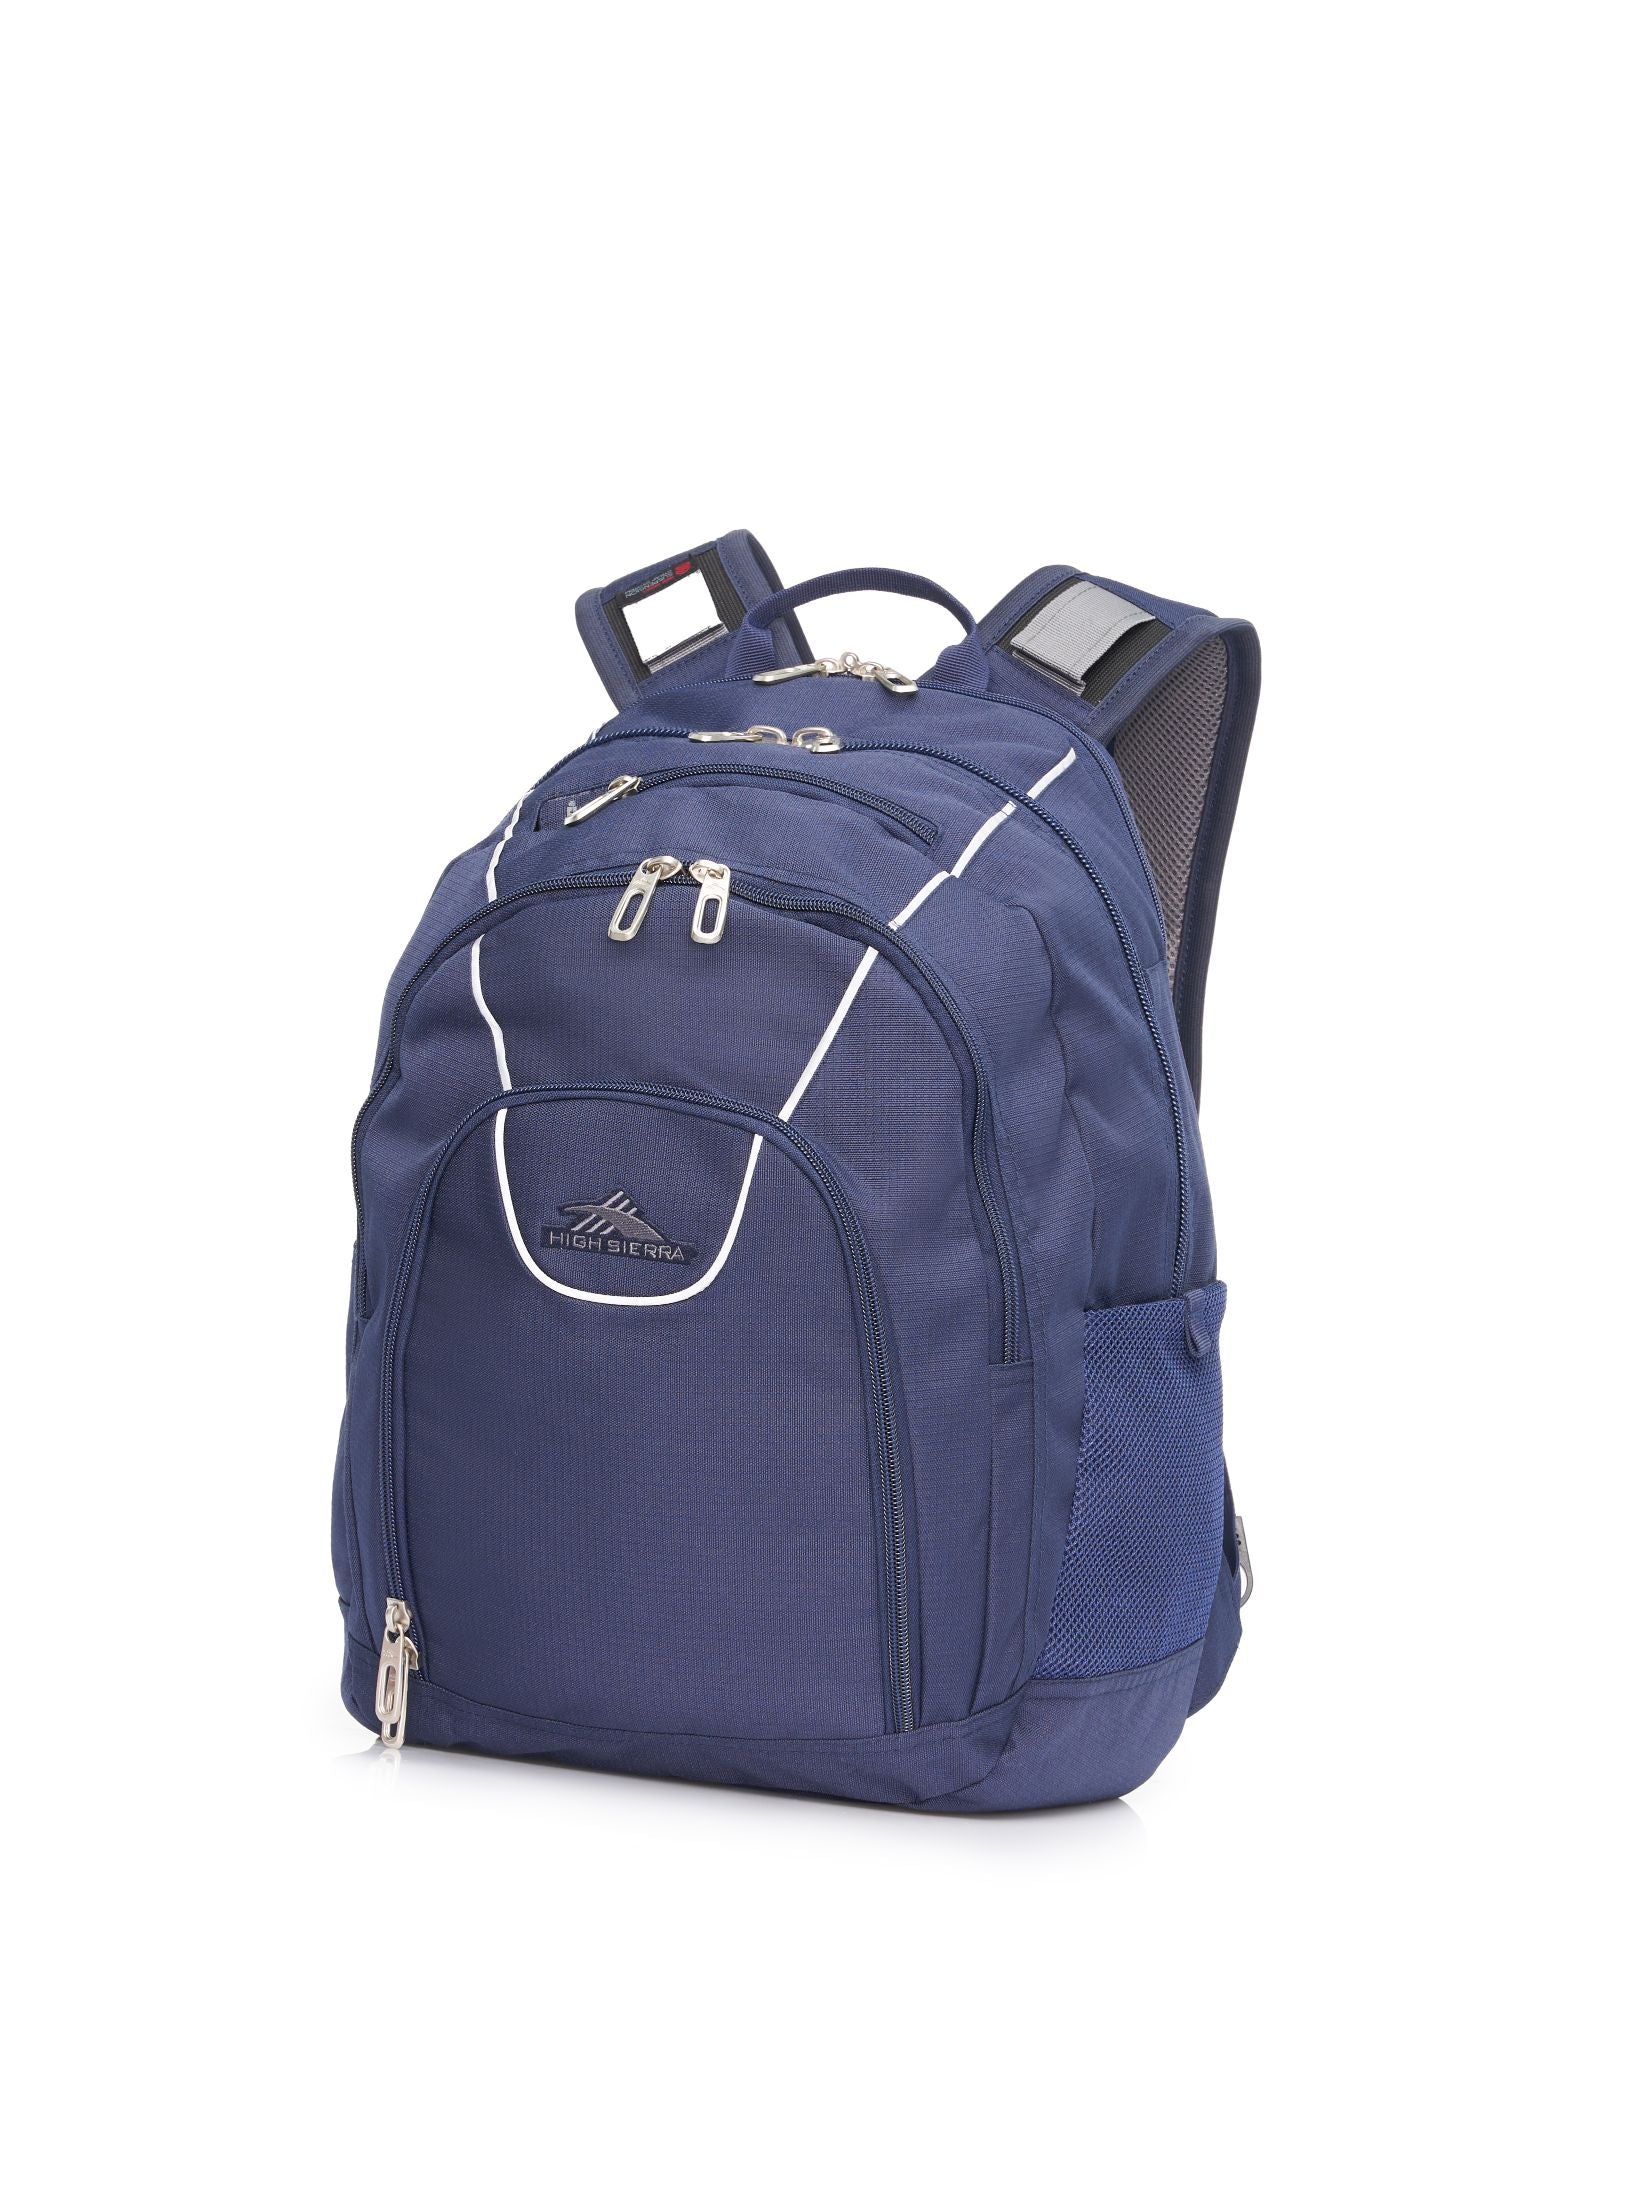 High Sierra - Academy 3.0 Backpack - Marine Blue - 0